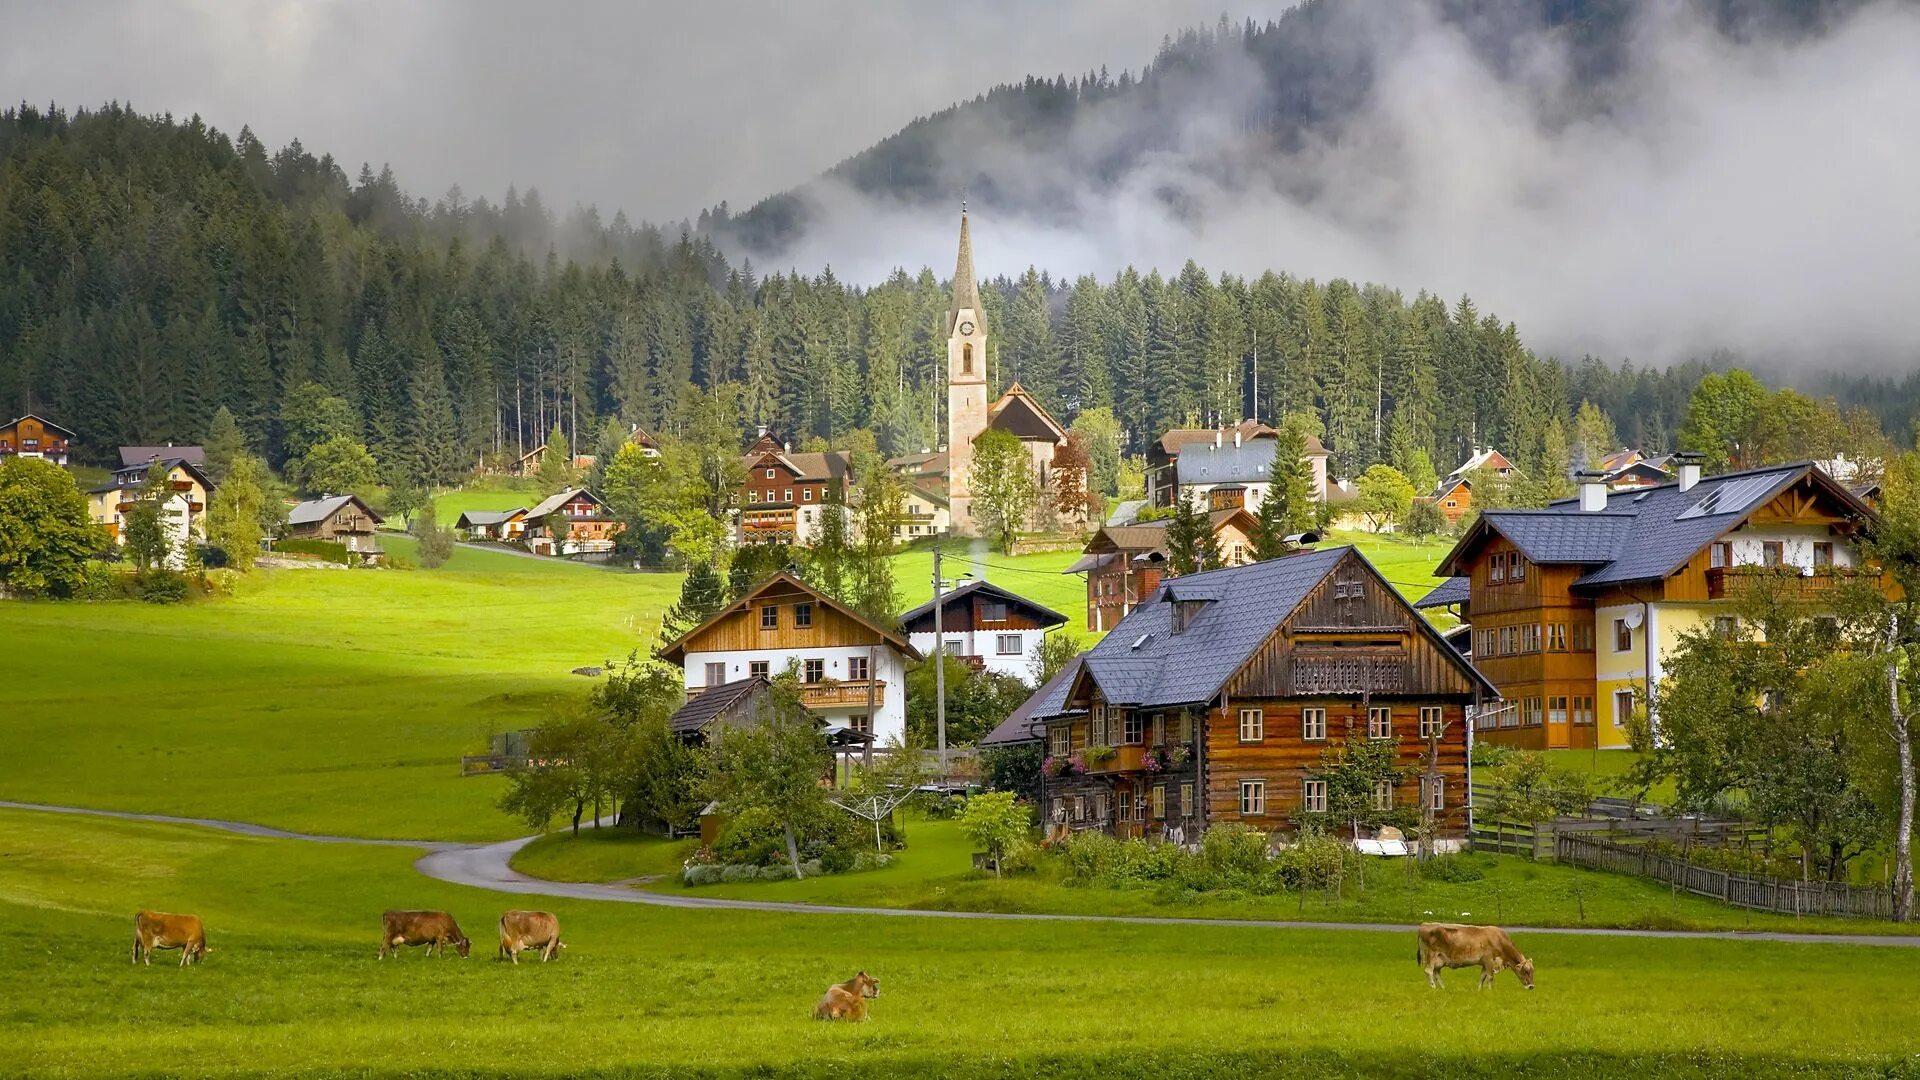 X village. Альпийские деревни в Австрии. Австрийская Альпийская деревня. Госау Австрия. Австрийская Горная деревня.